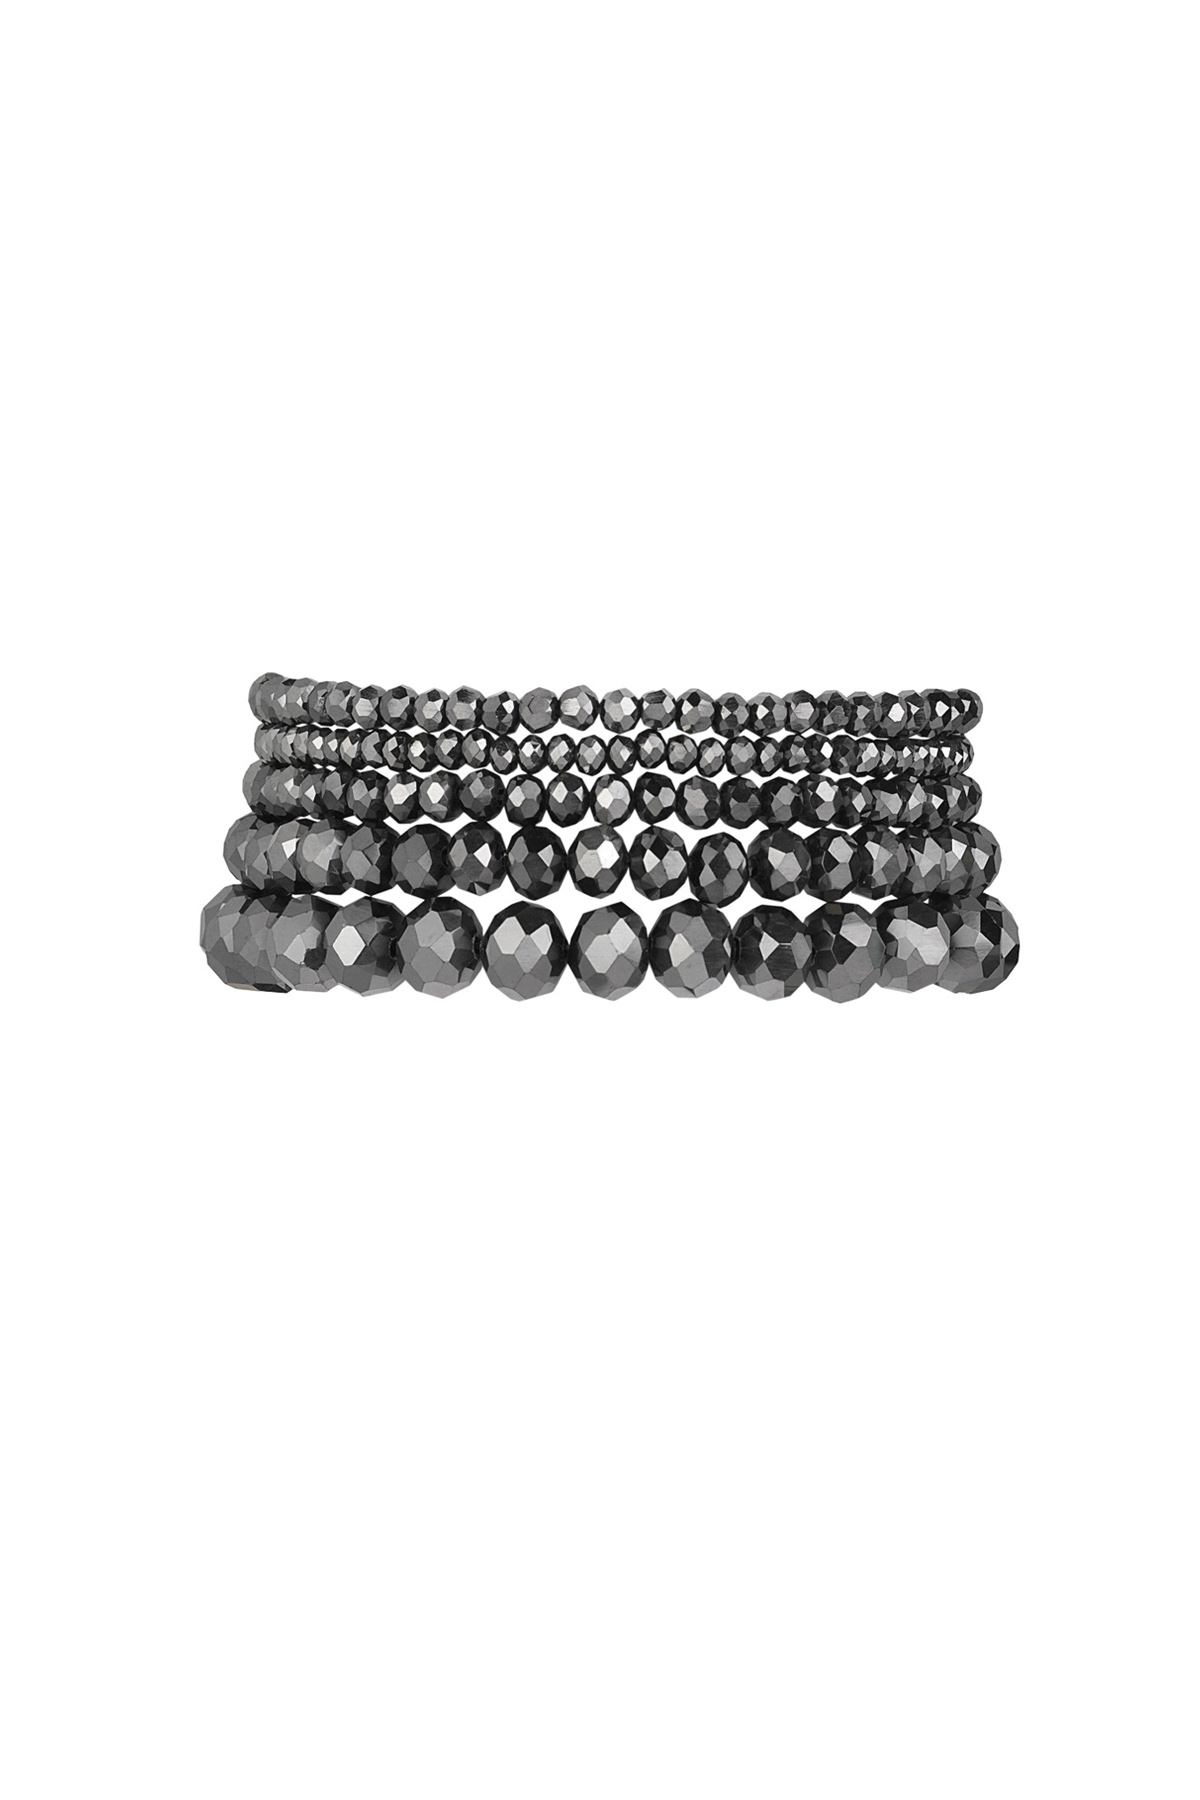 Set van 5 kristal armbanden grijs - donkergrijs h5 